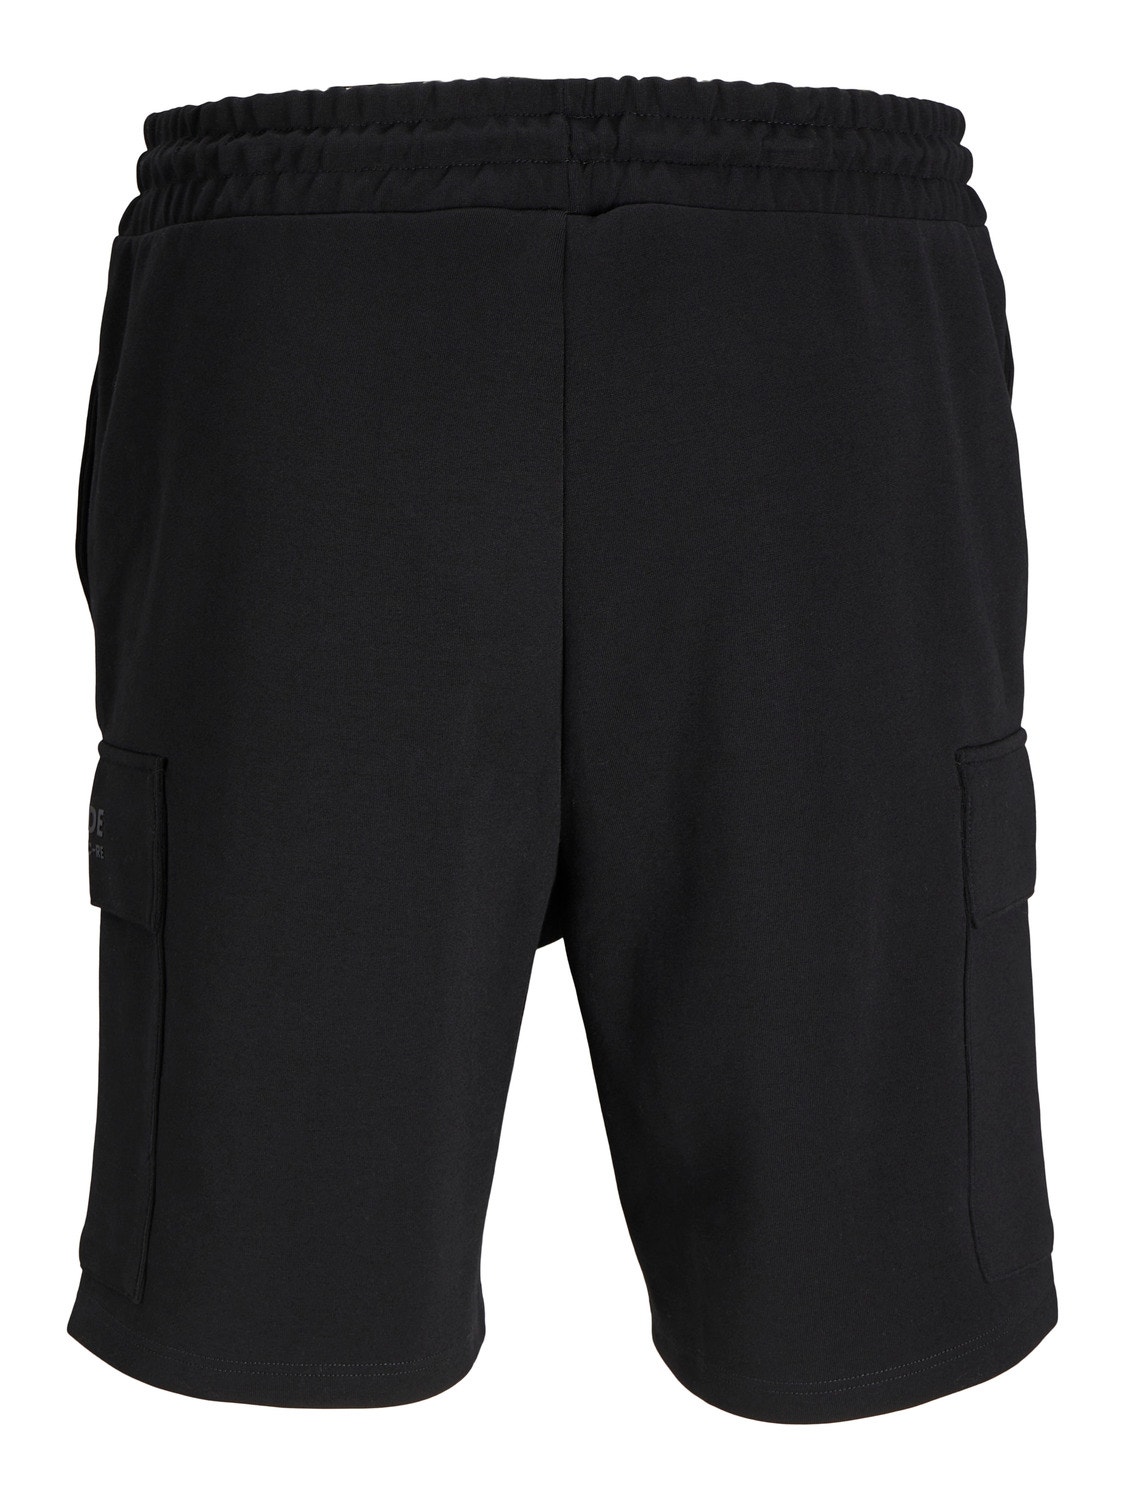 Jack & Jones Relaxed Fit Sweat shorts -Black - 12255386